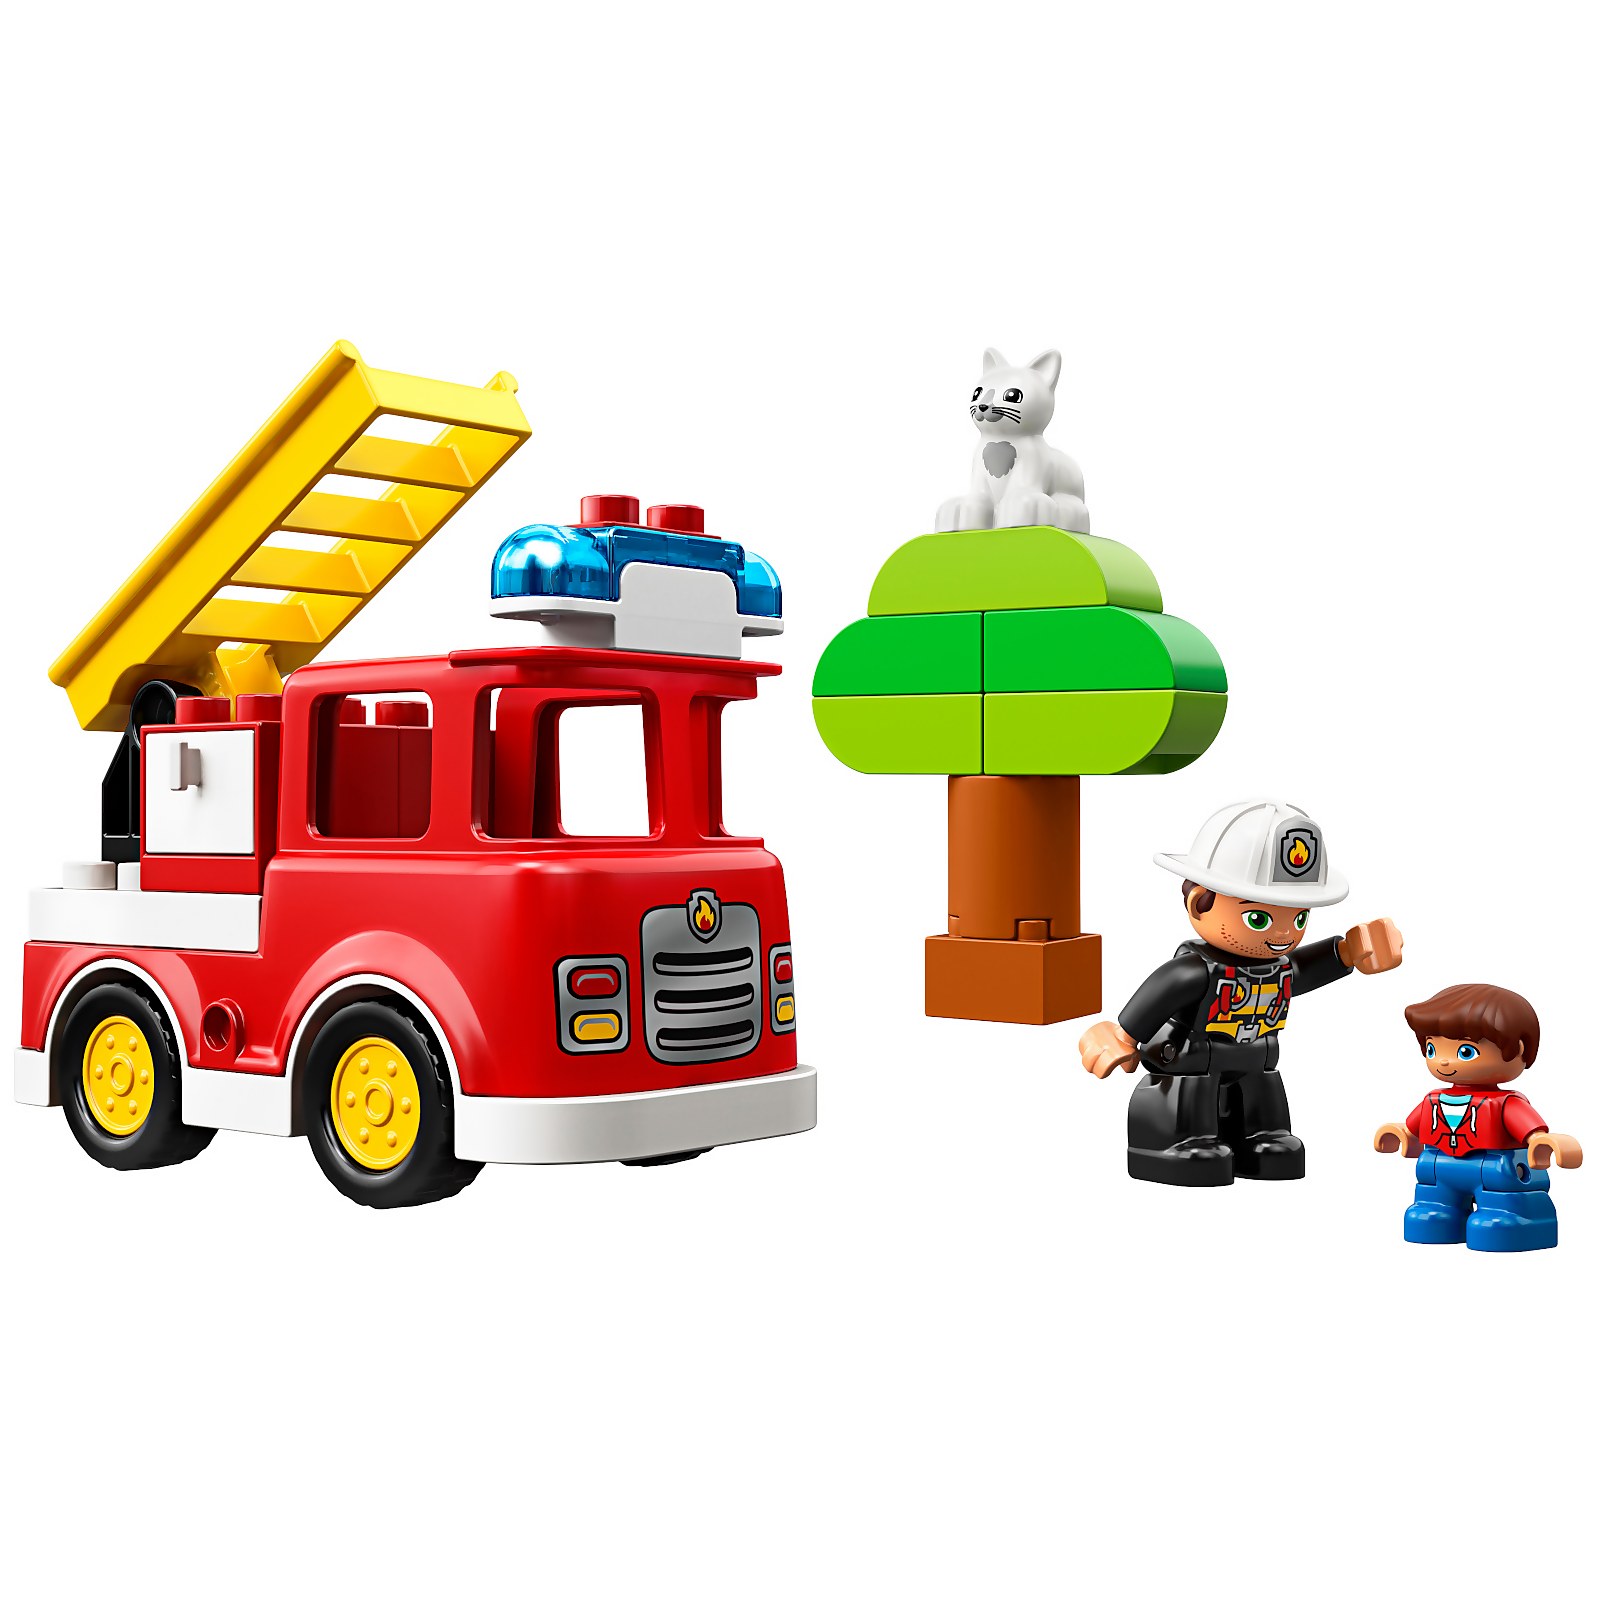 LEGO DUPLO Town: Fire Truck Building Set (10901)